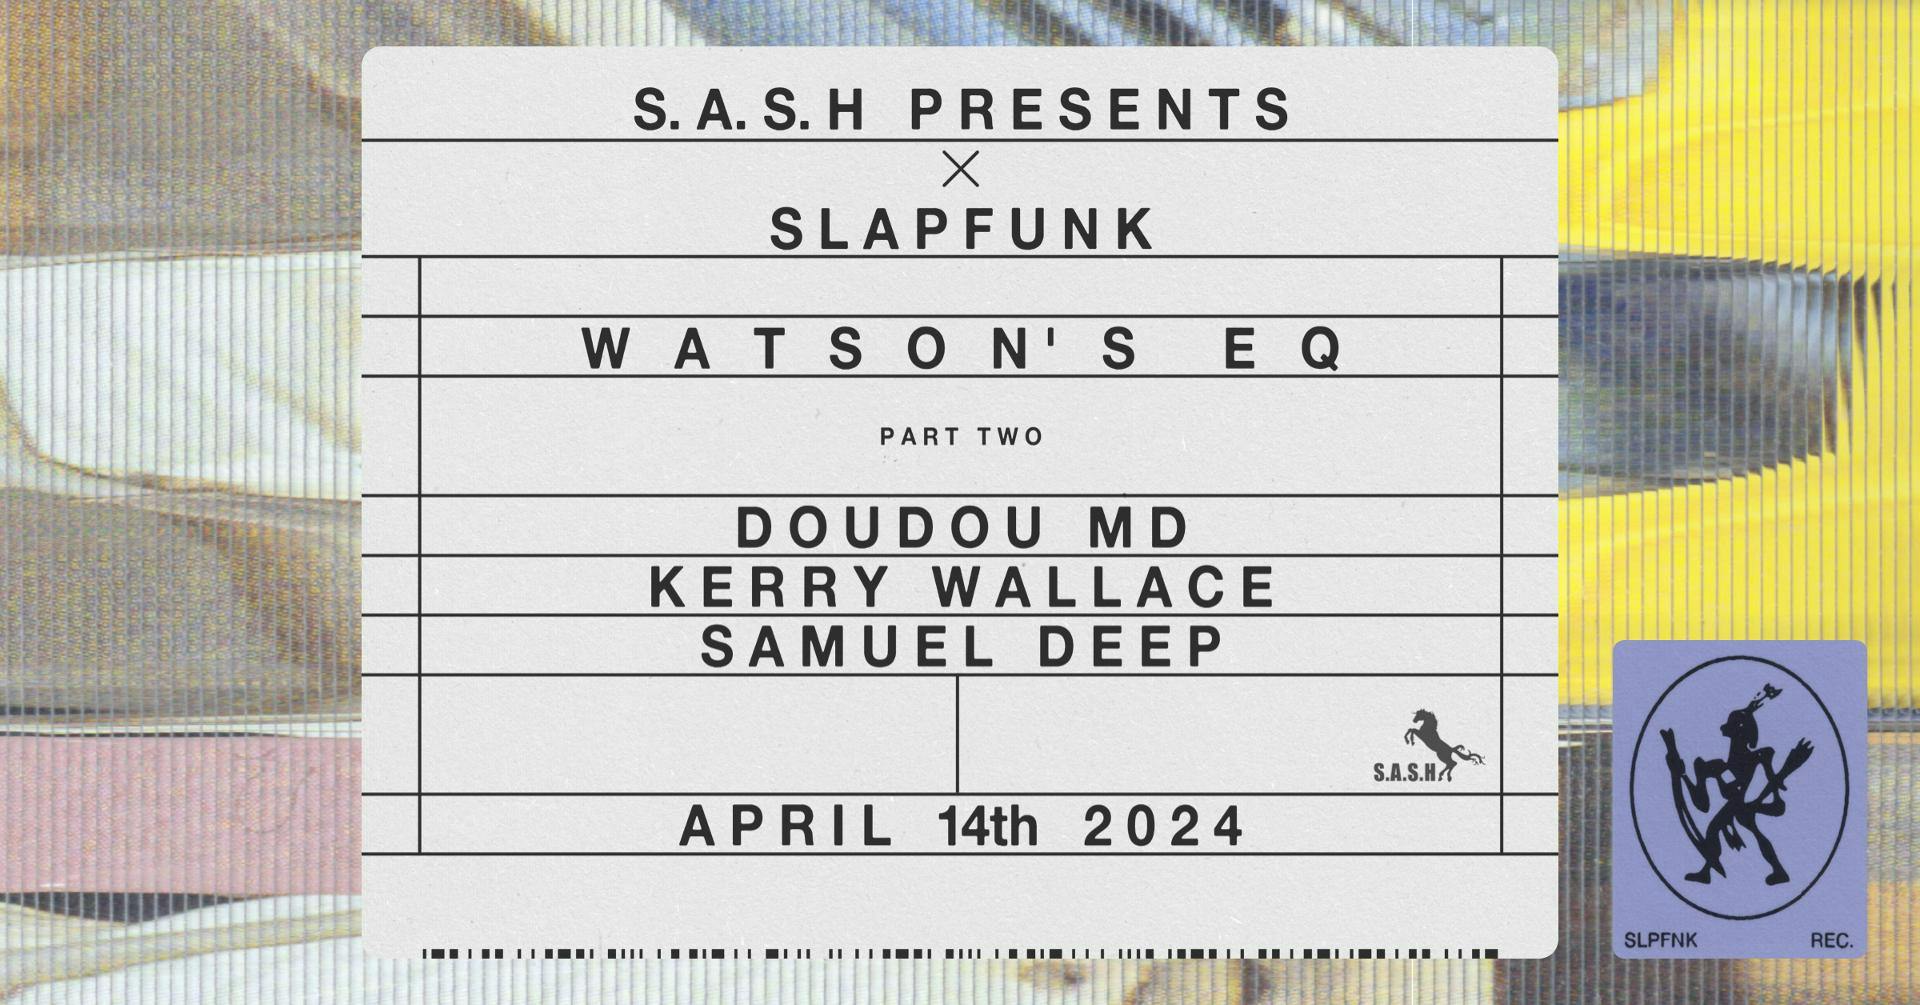 ★ S.A.S.H Presents SlapFunk Part Two ★ Doudou MD & Samuel Deep ★ Sunday April 14th ★